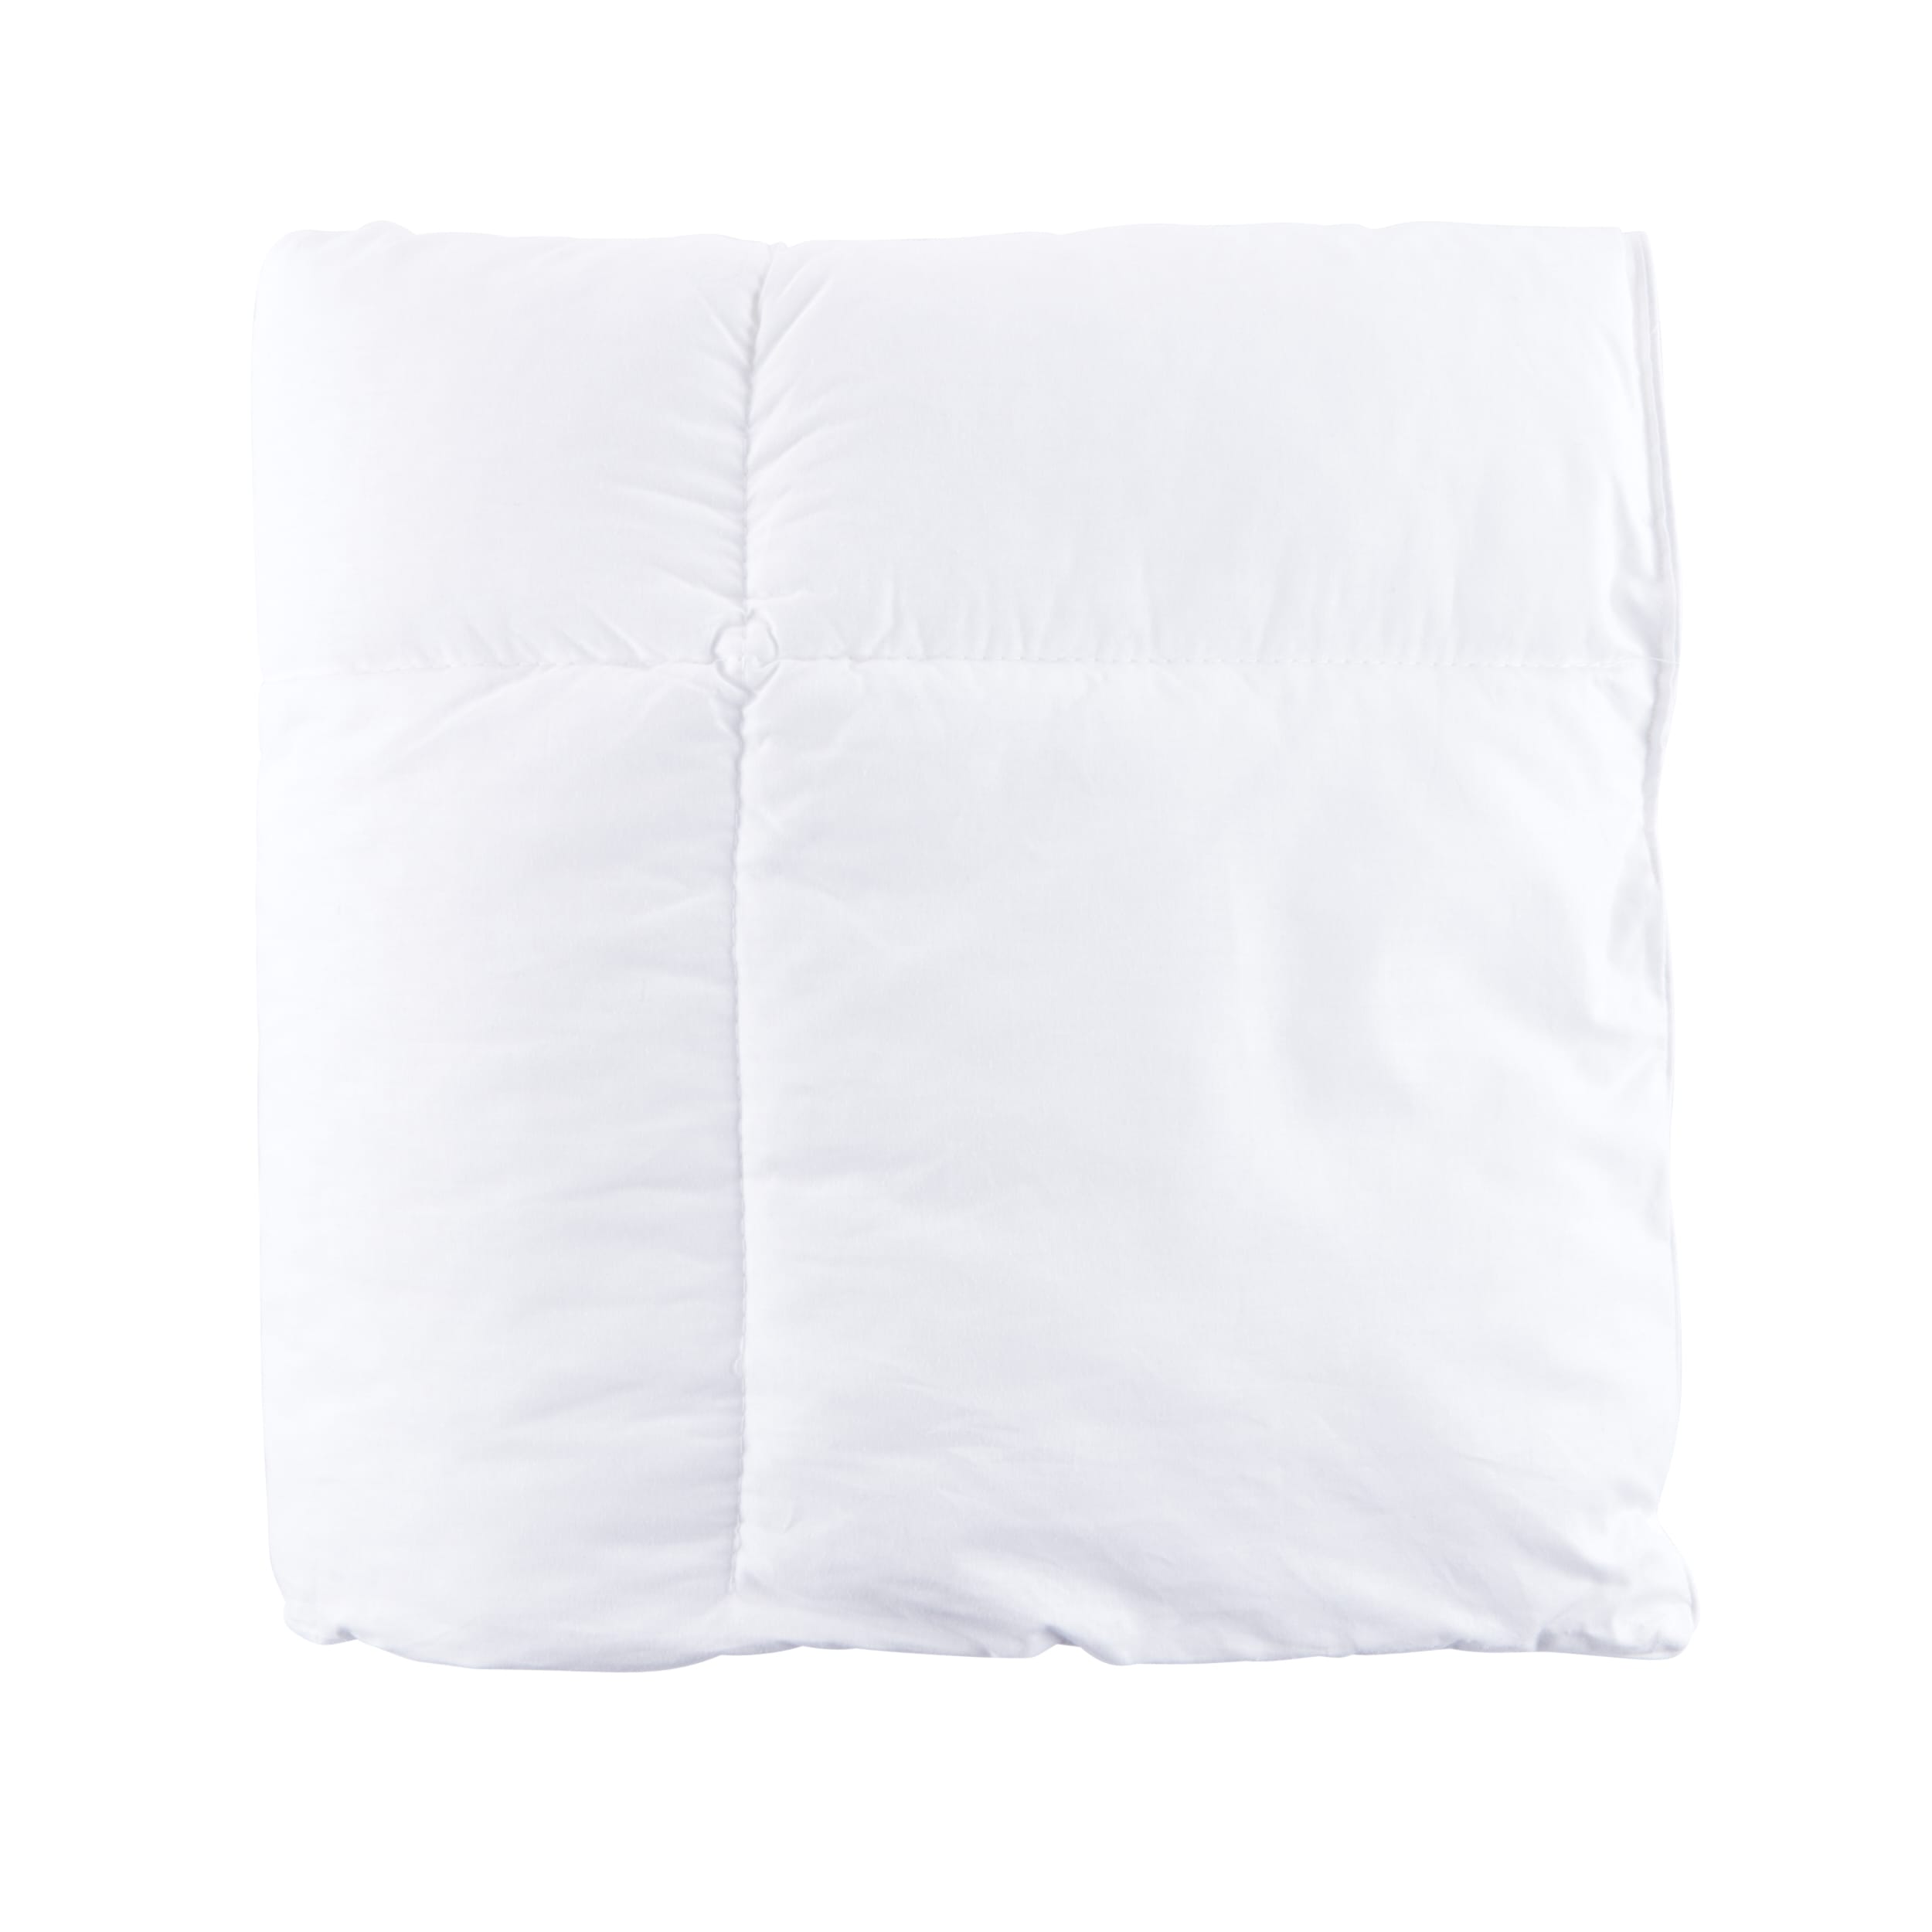 Theophile & Patachou Cot Bed Eiderdown 100 X 135 cm - White